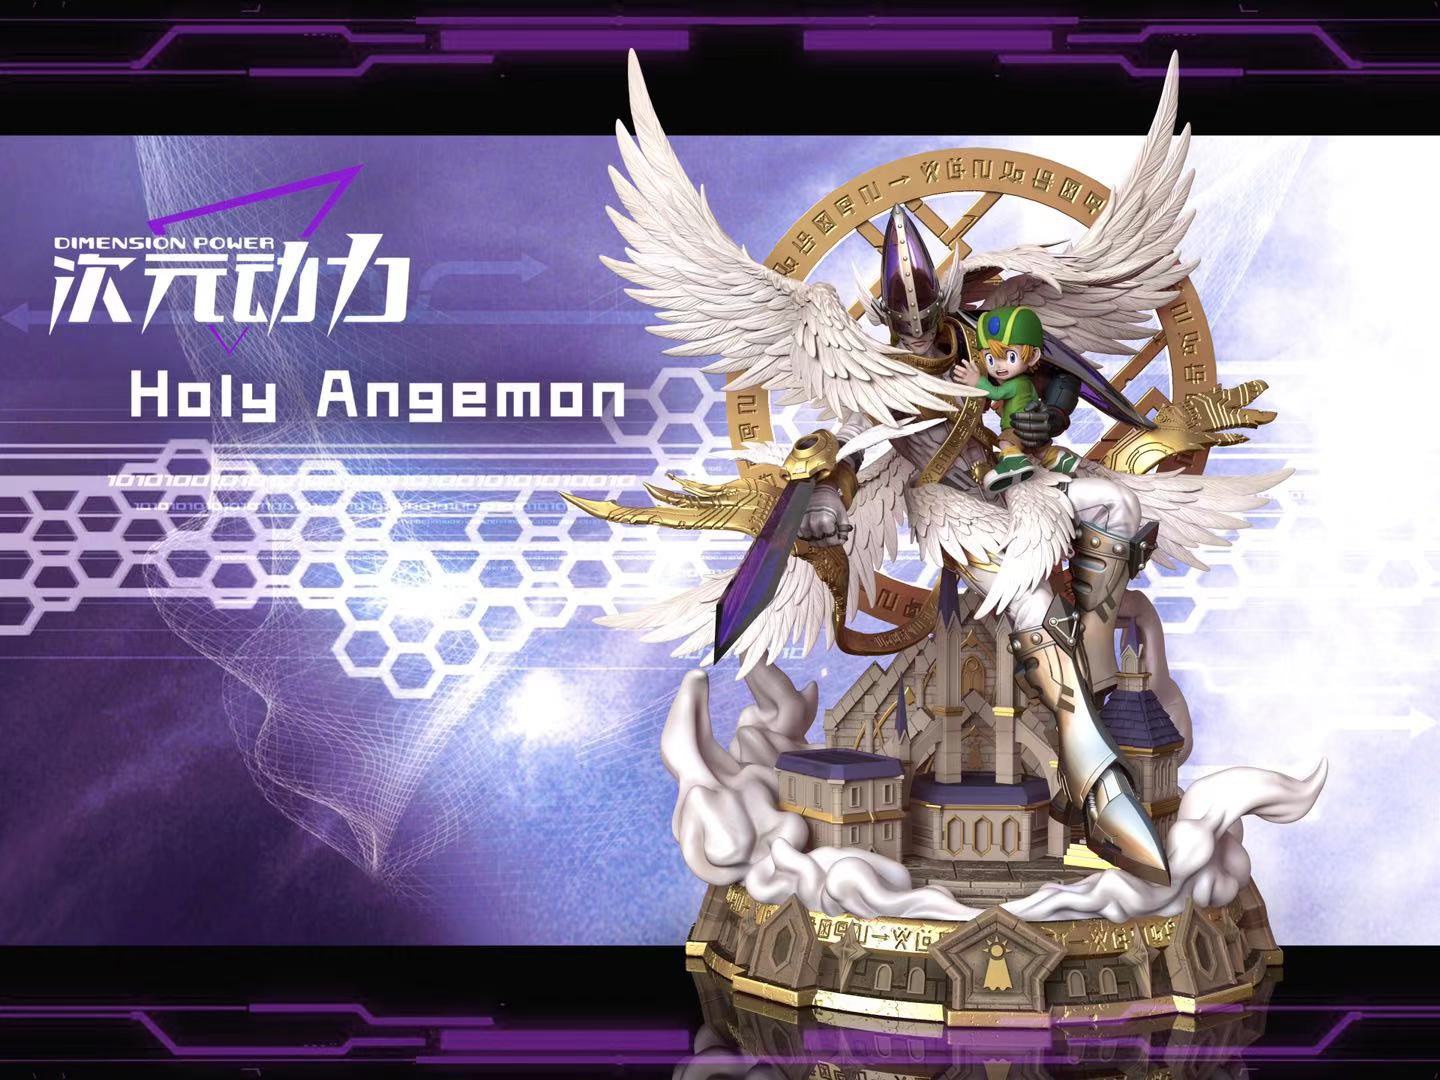 Holy Angemon ฮิคารุ Dimenstion Data (มัดจำ) [[SOLD OUT]]